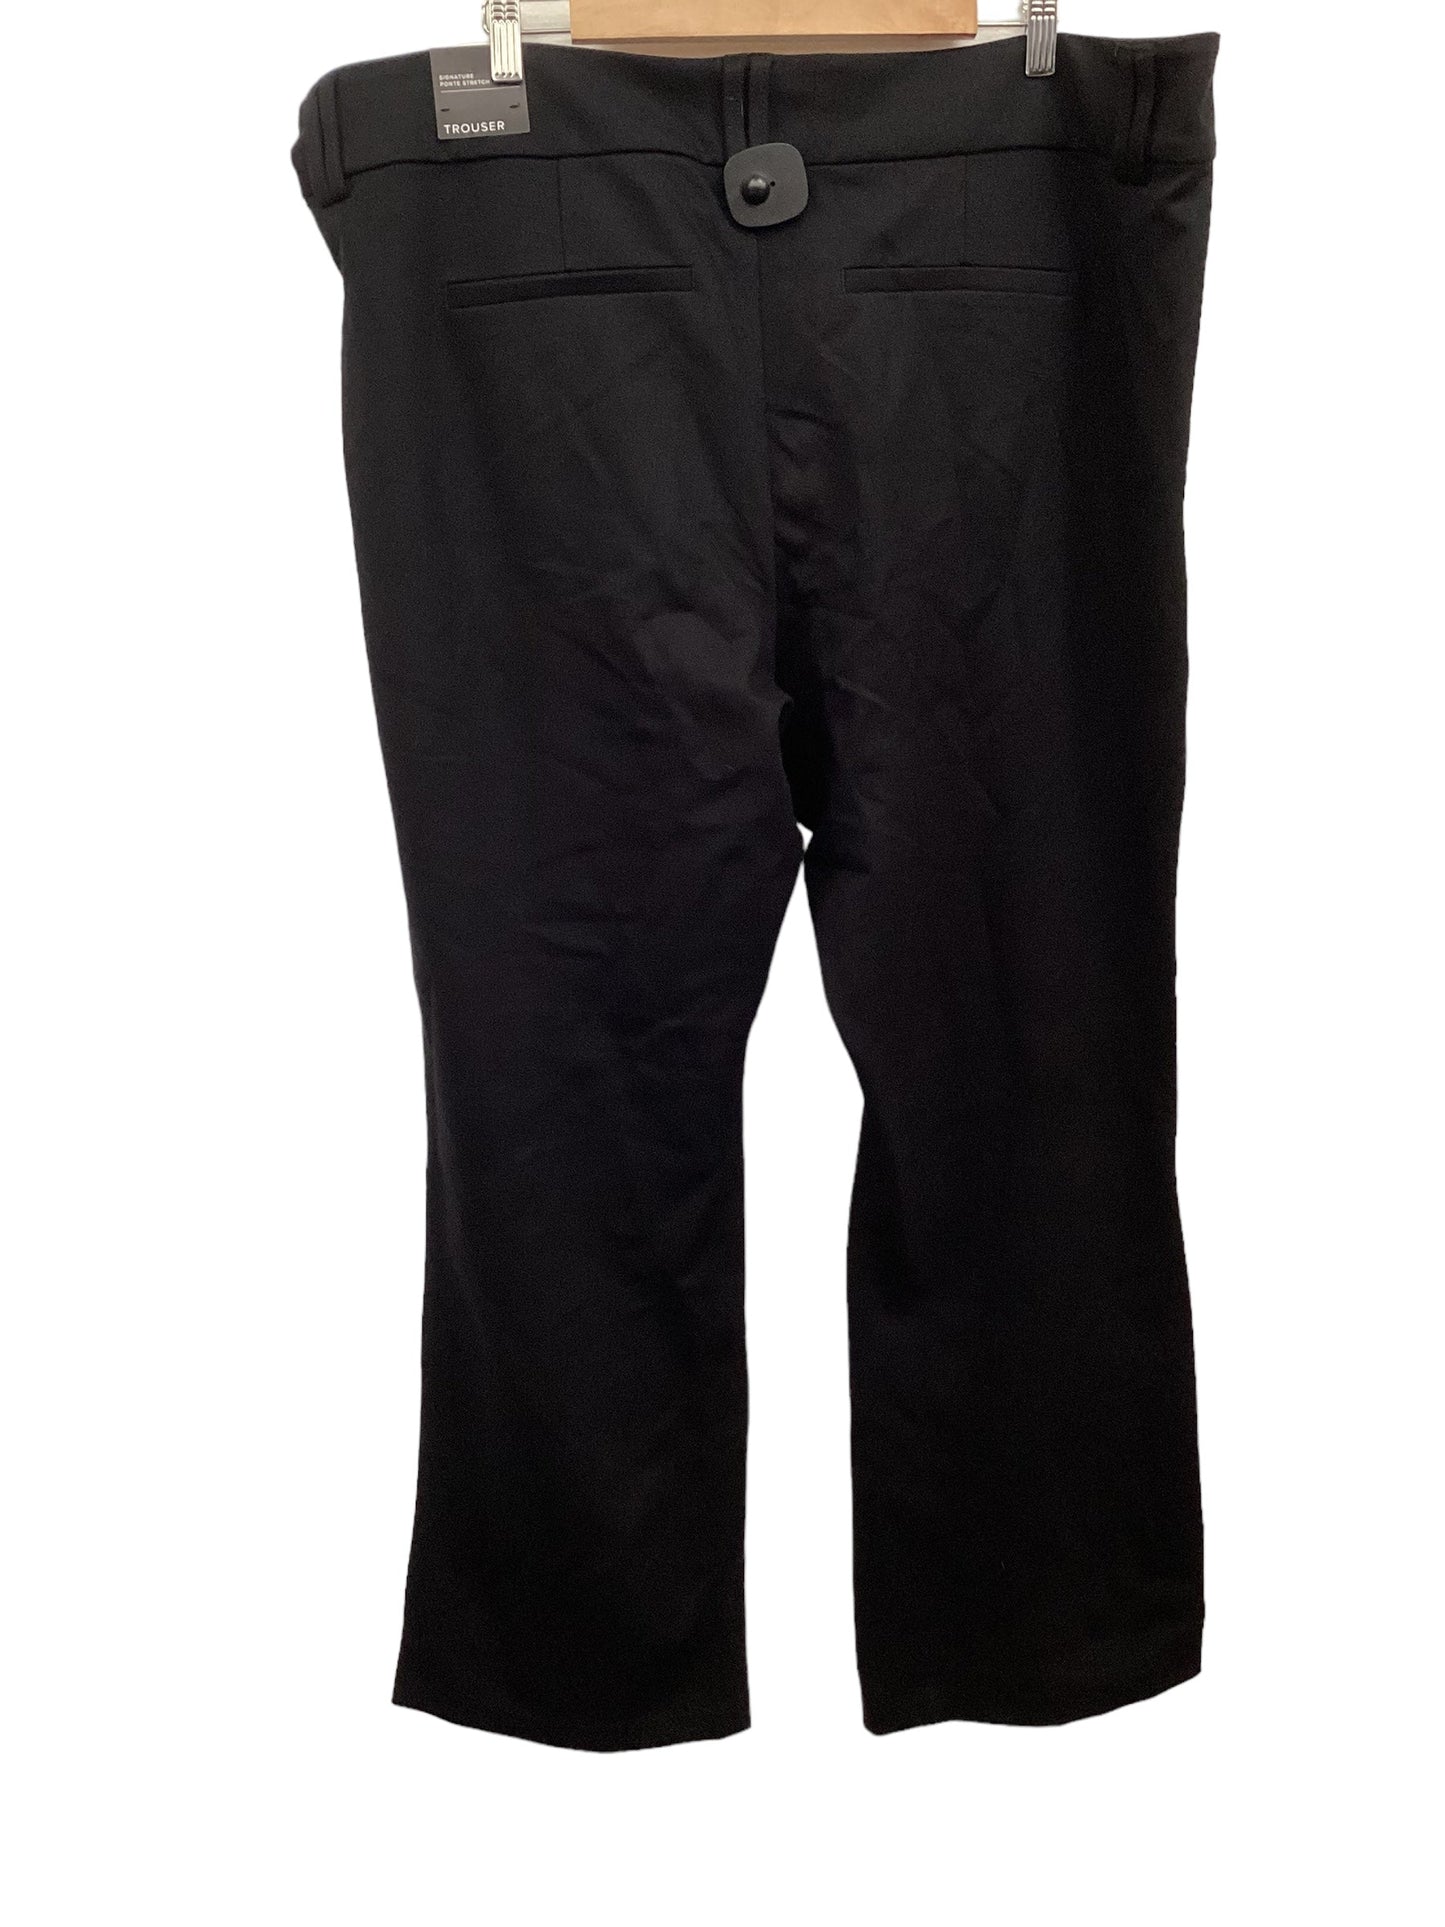 Black Pants Other Torrid, Size 24